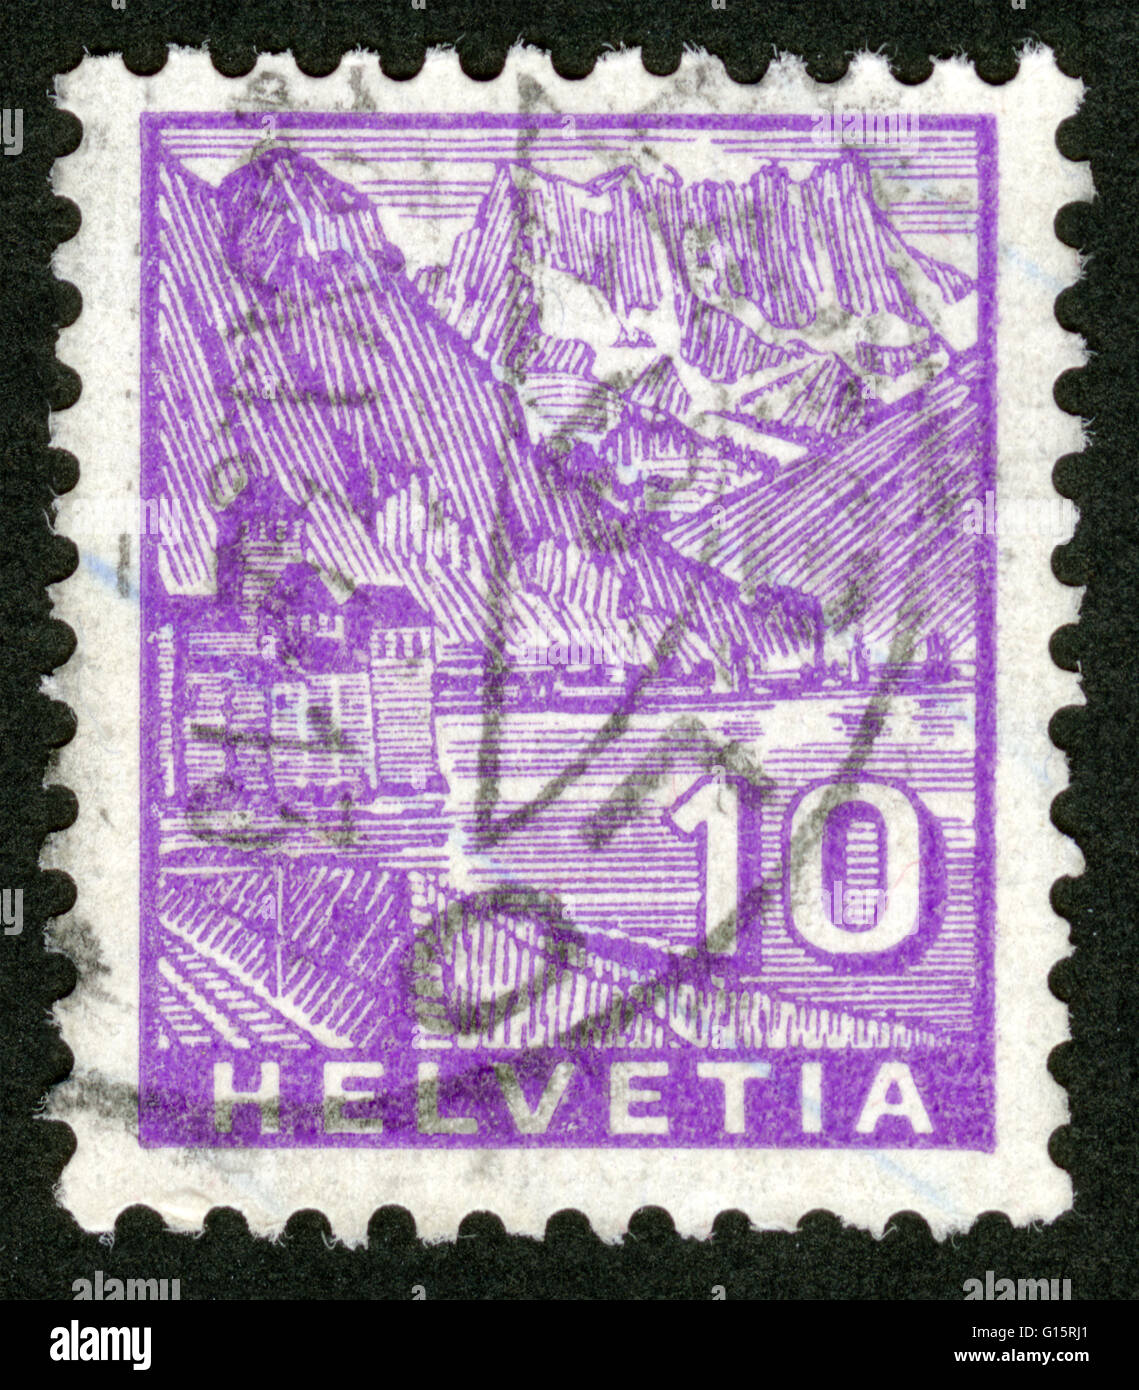 La Svizzera, Helvetia, francobollo, post mark Foto Stock